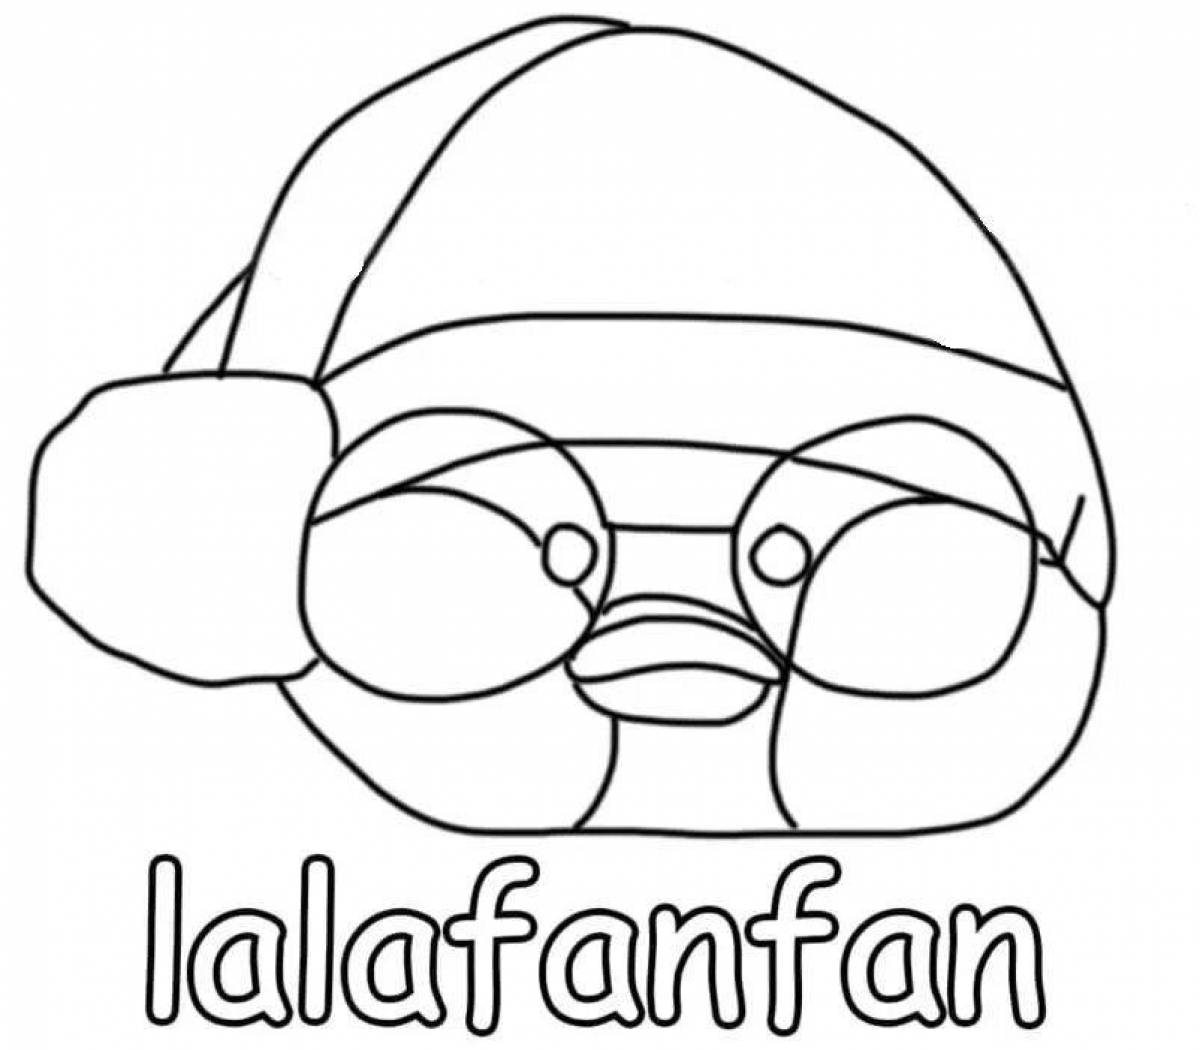 For girls lalafanfan duck #2